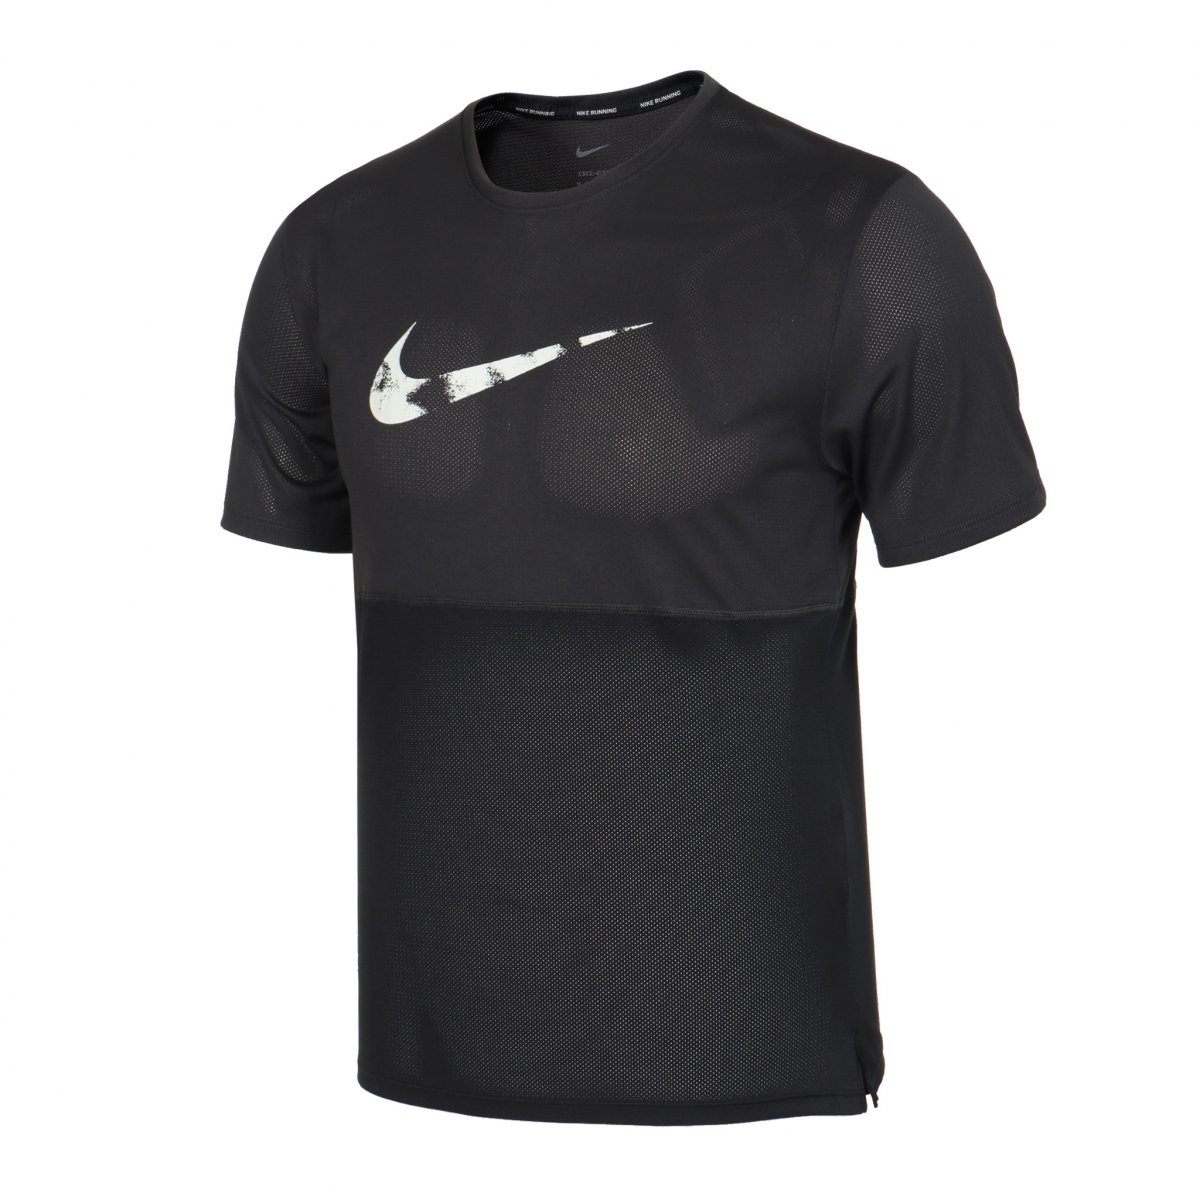 Camiseta Nike DRI FIT RUN GX Preto